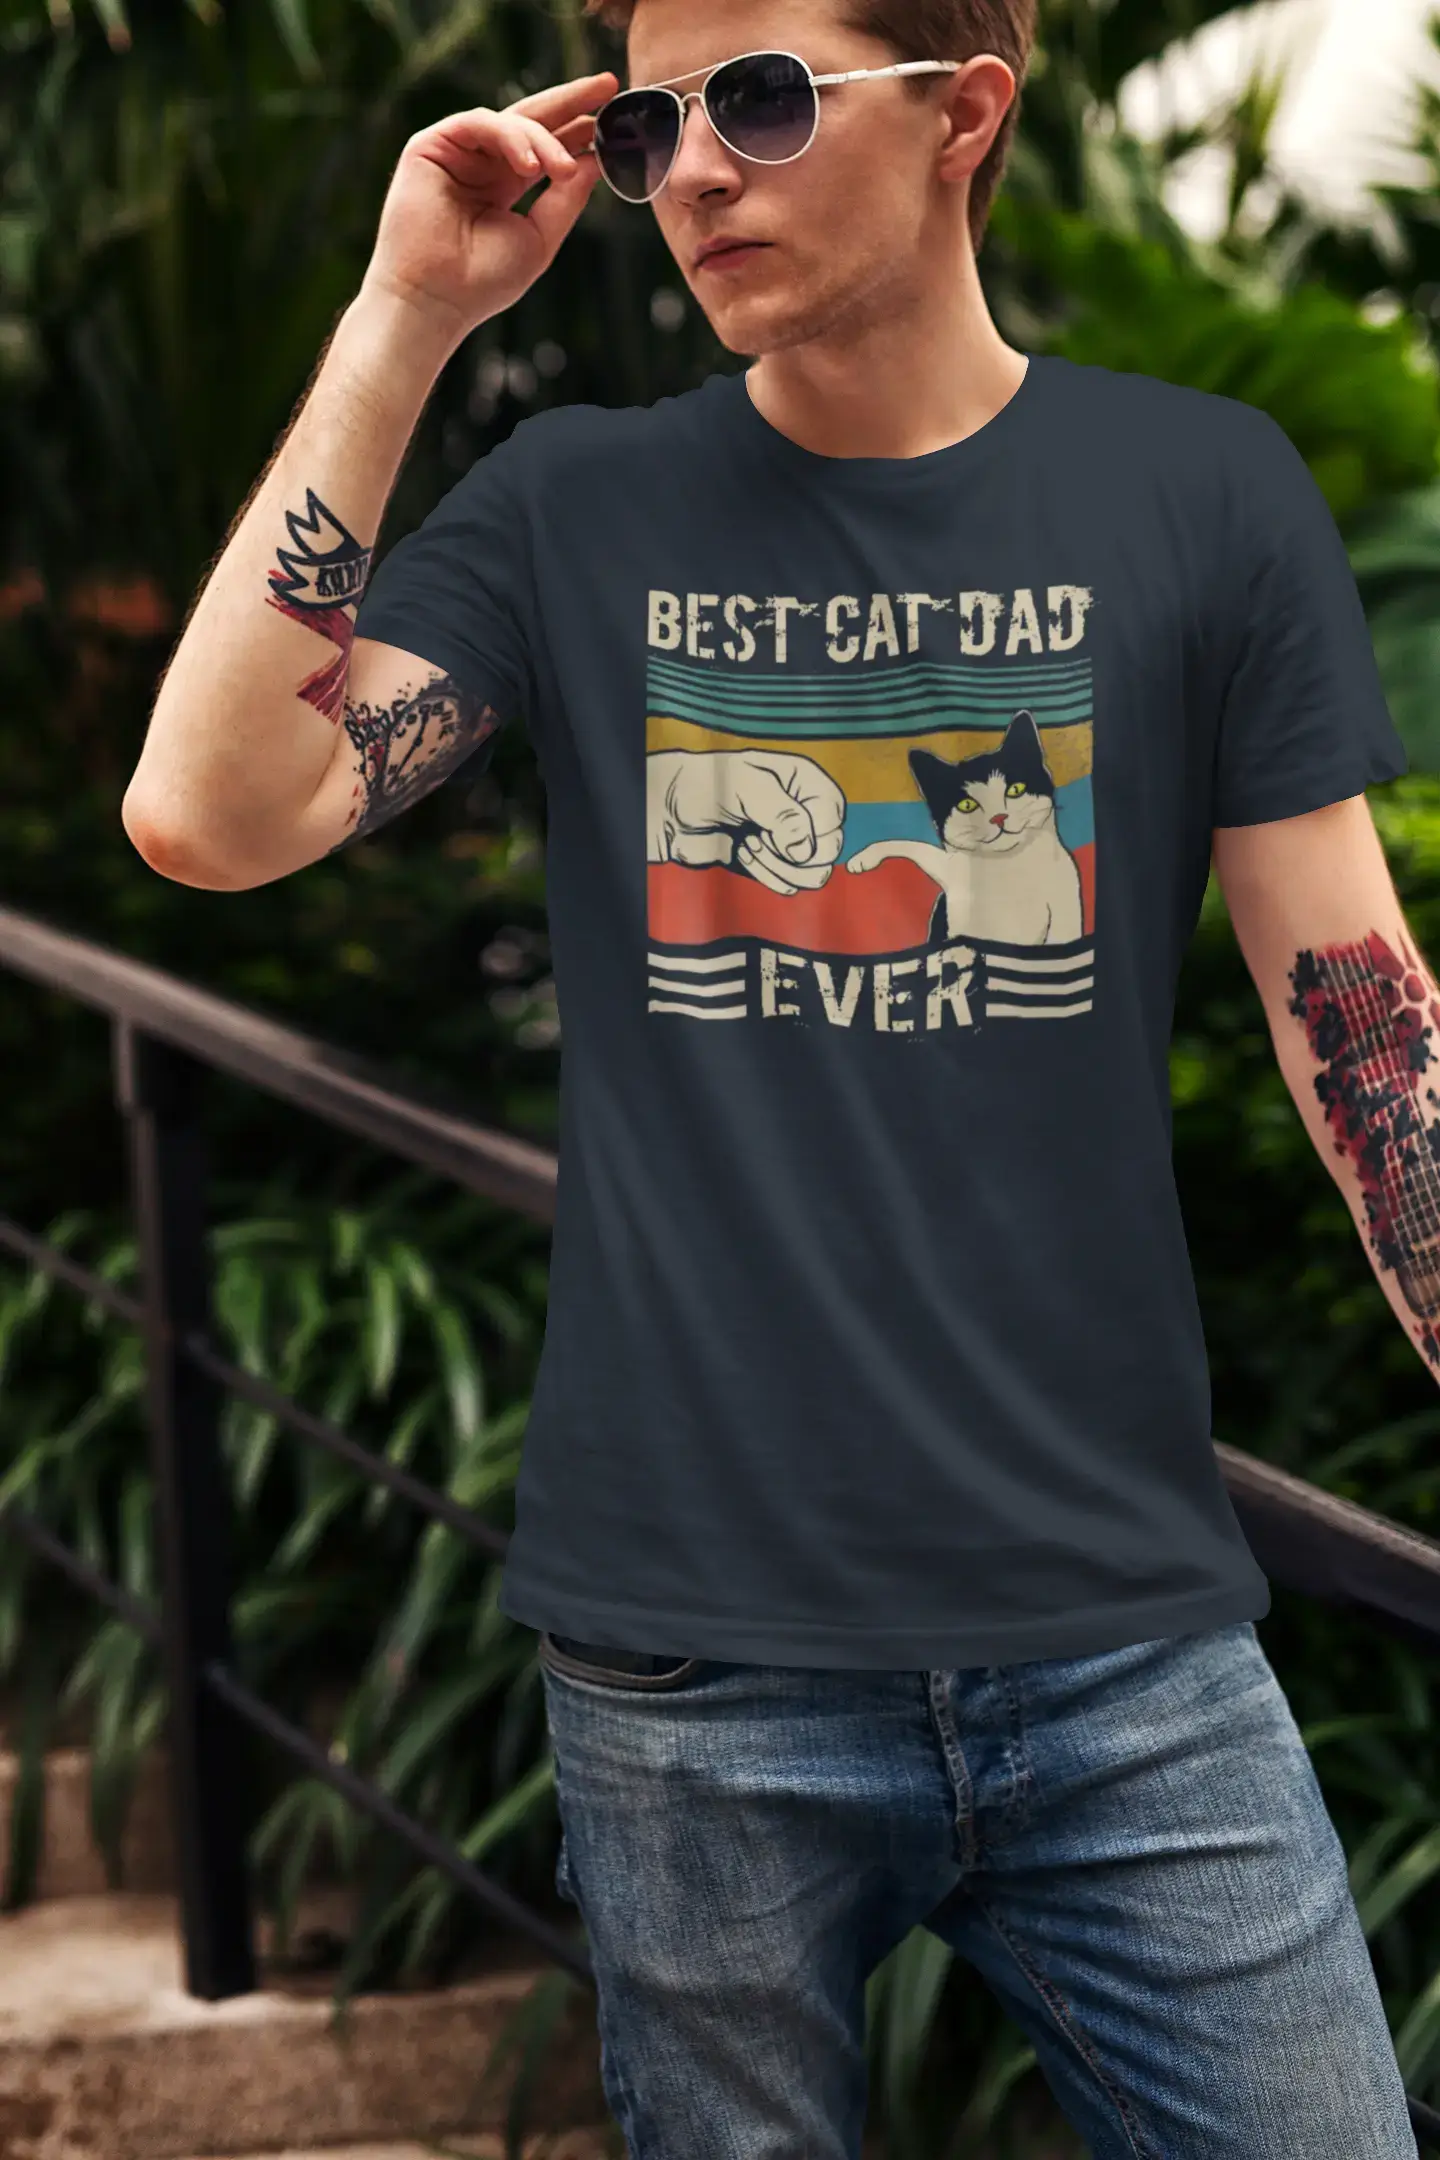 Men's Graphic T-Shirt Best Cat Dad Ever Fist Bump Gift Idea